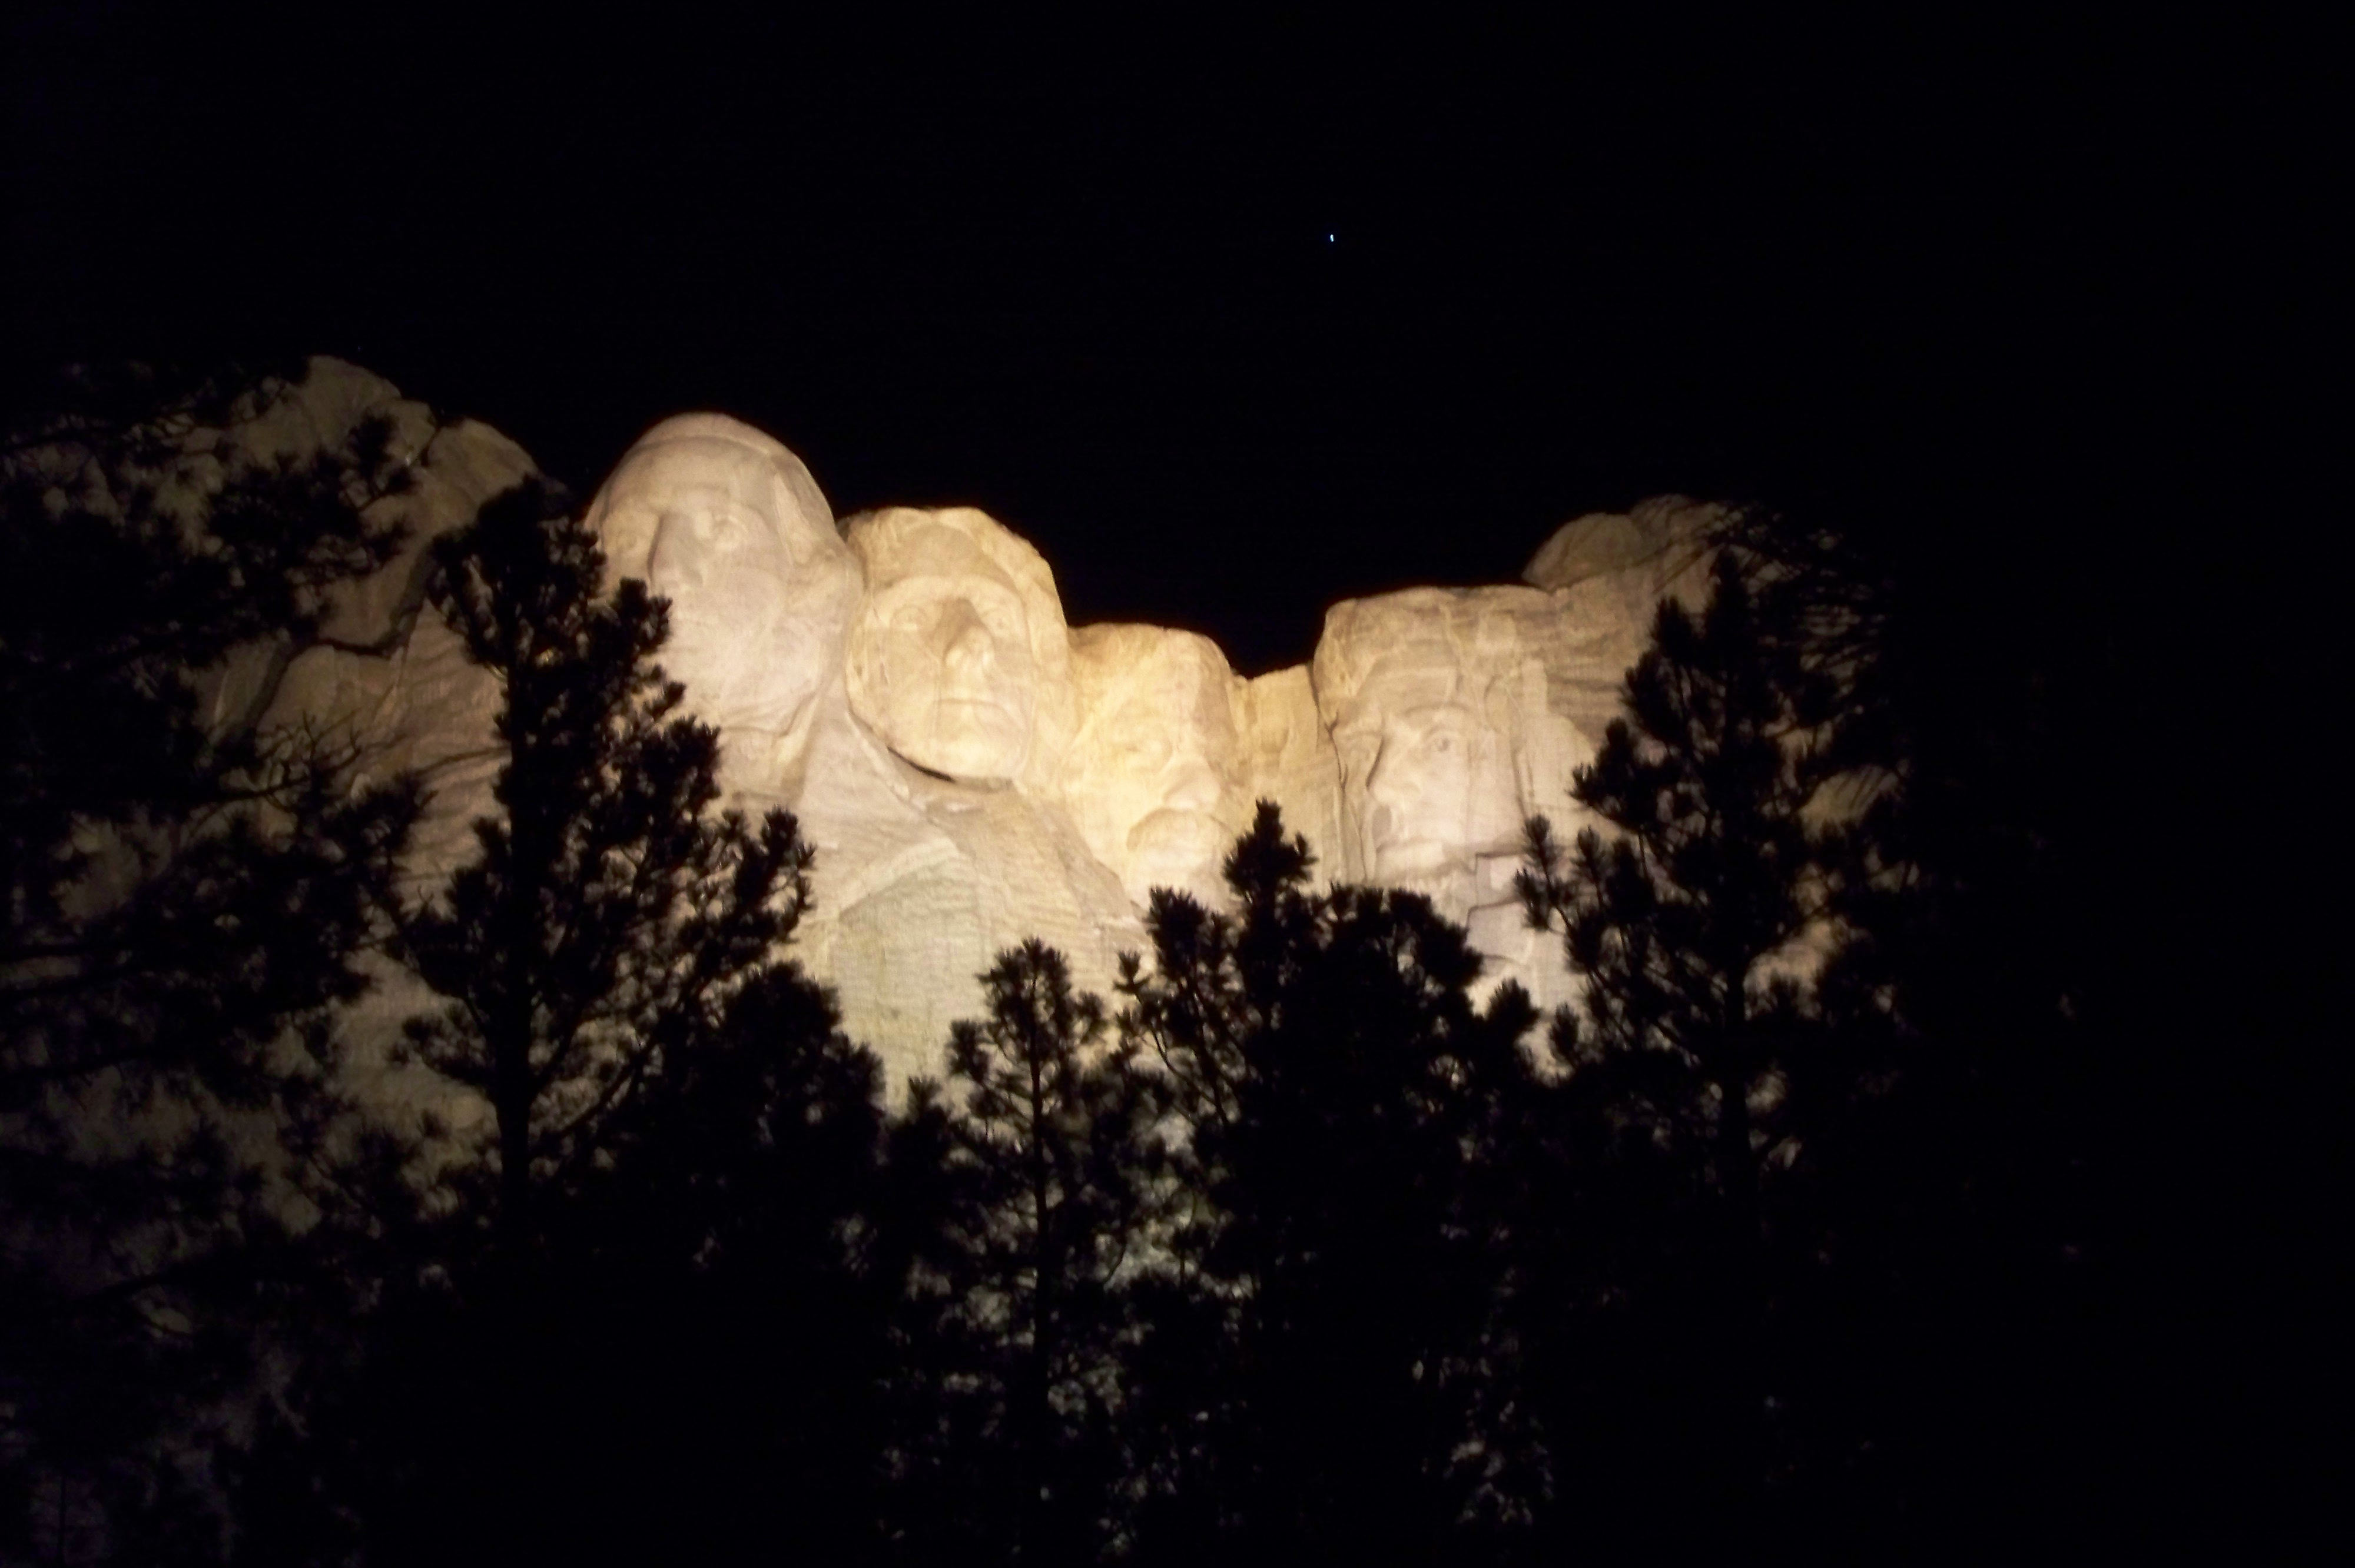 Mount rushmore at night photo